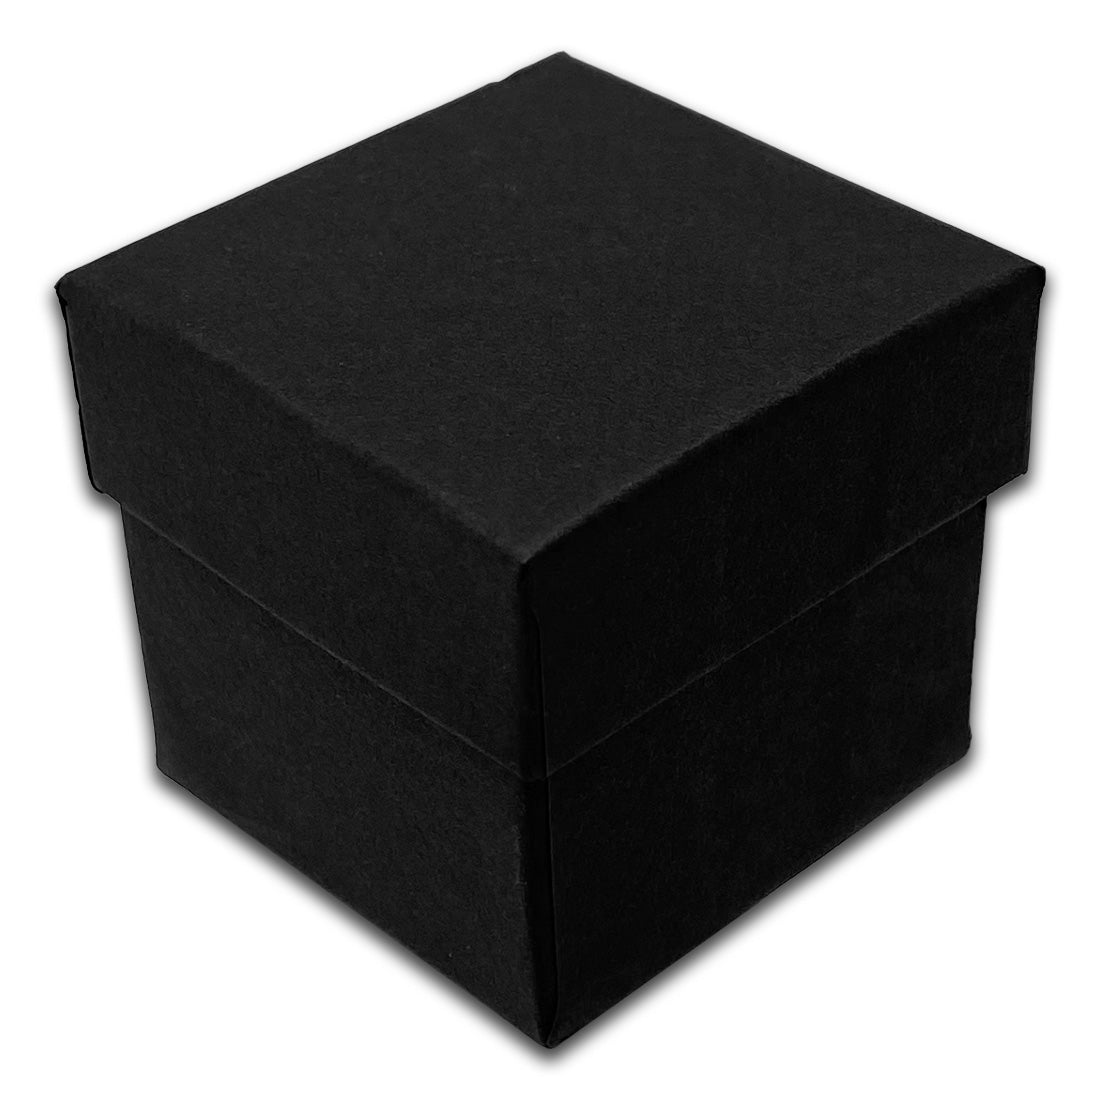 1 9/16" x 1 9/16" Black Paper Ring Box with Black Foam Insert